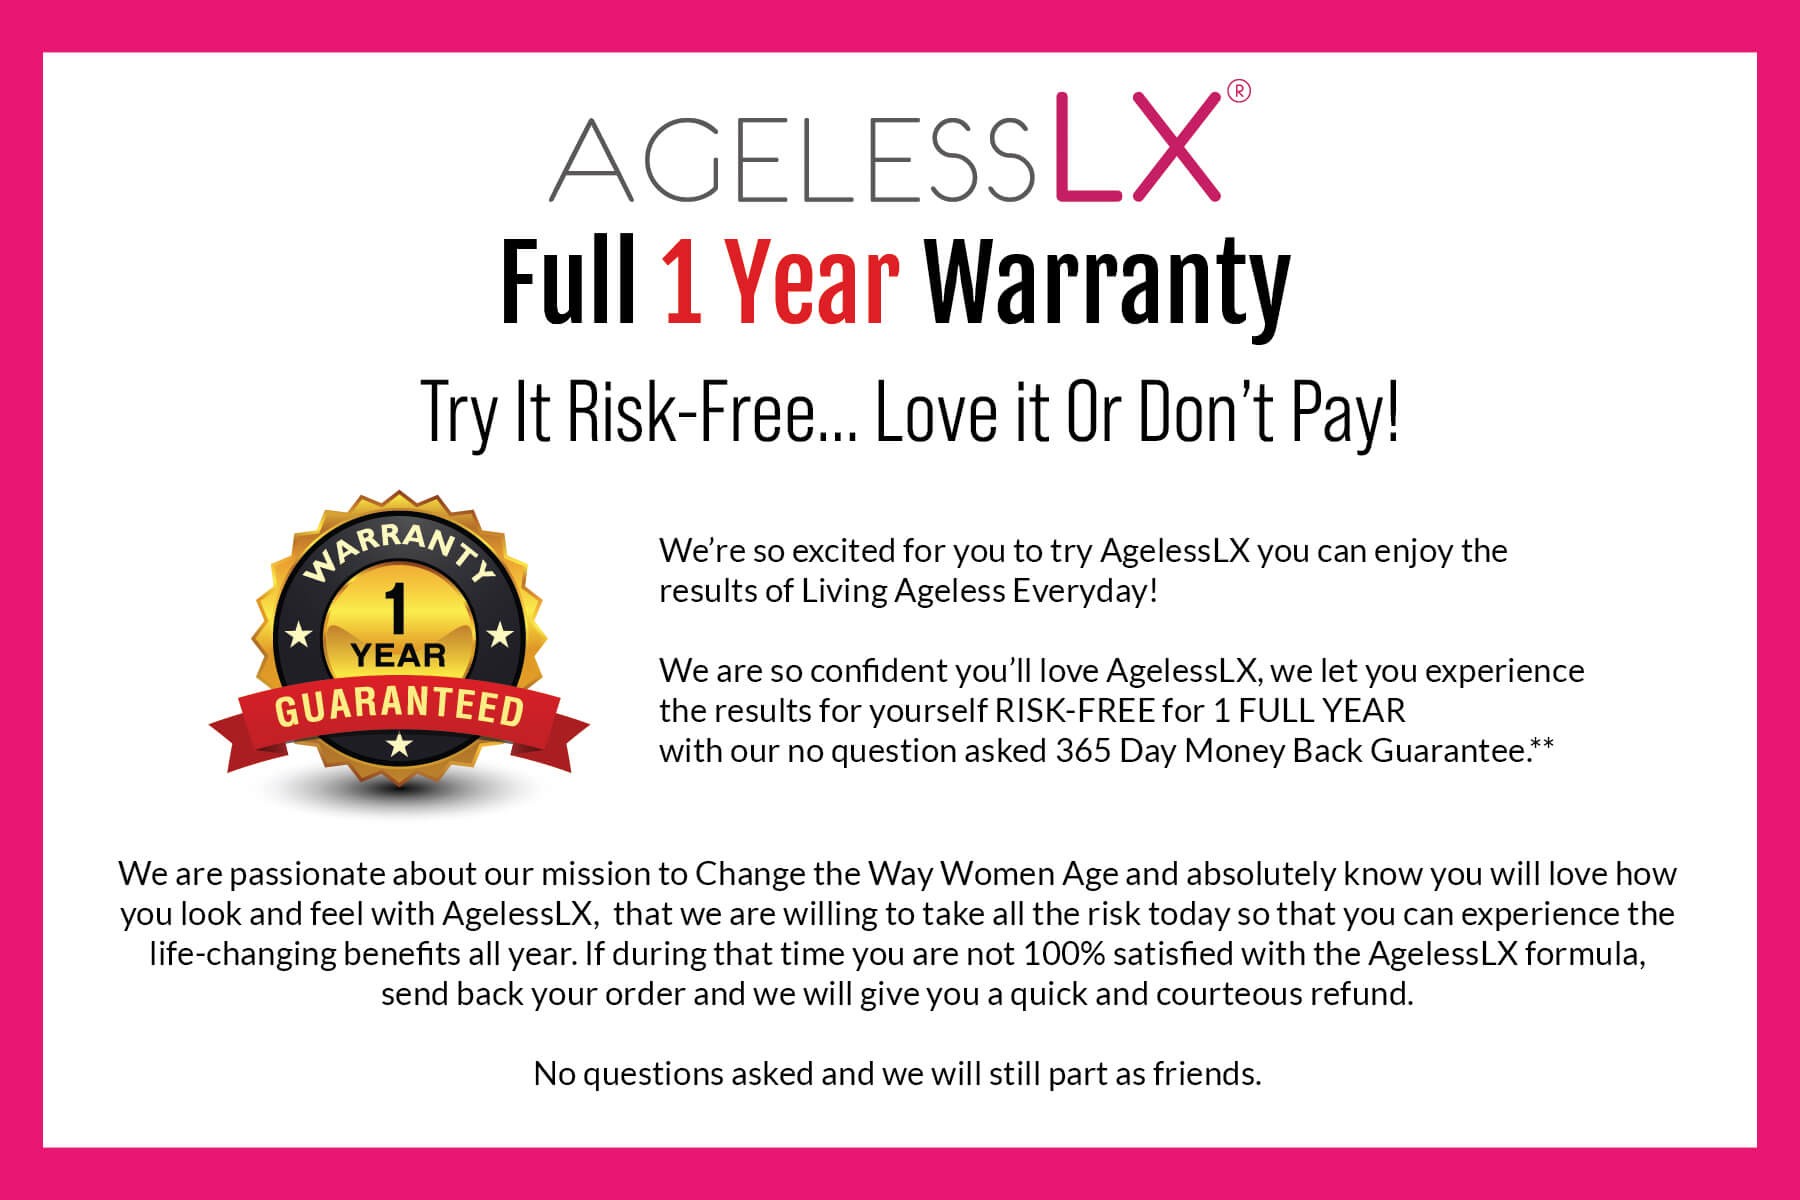 AgelessLX Full 1 Year Warranty